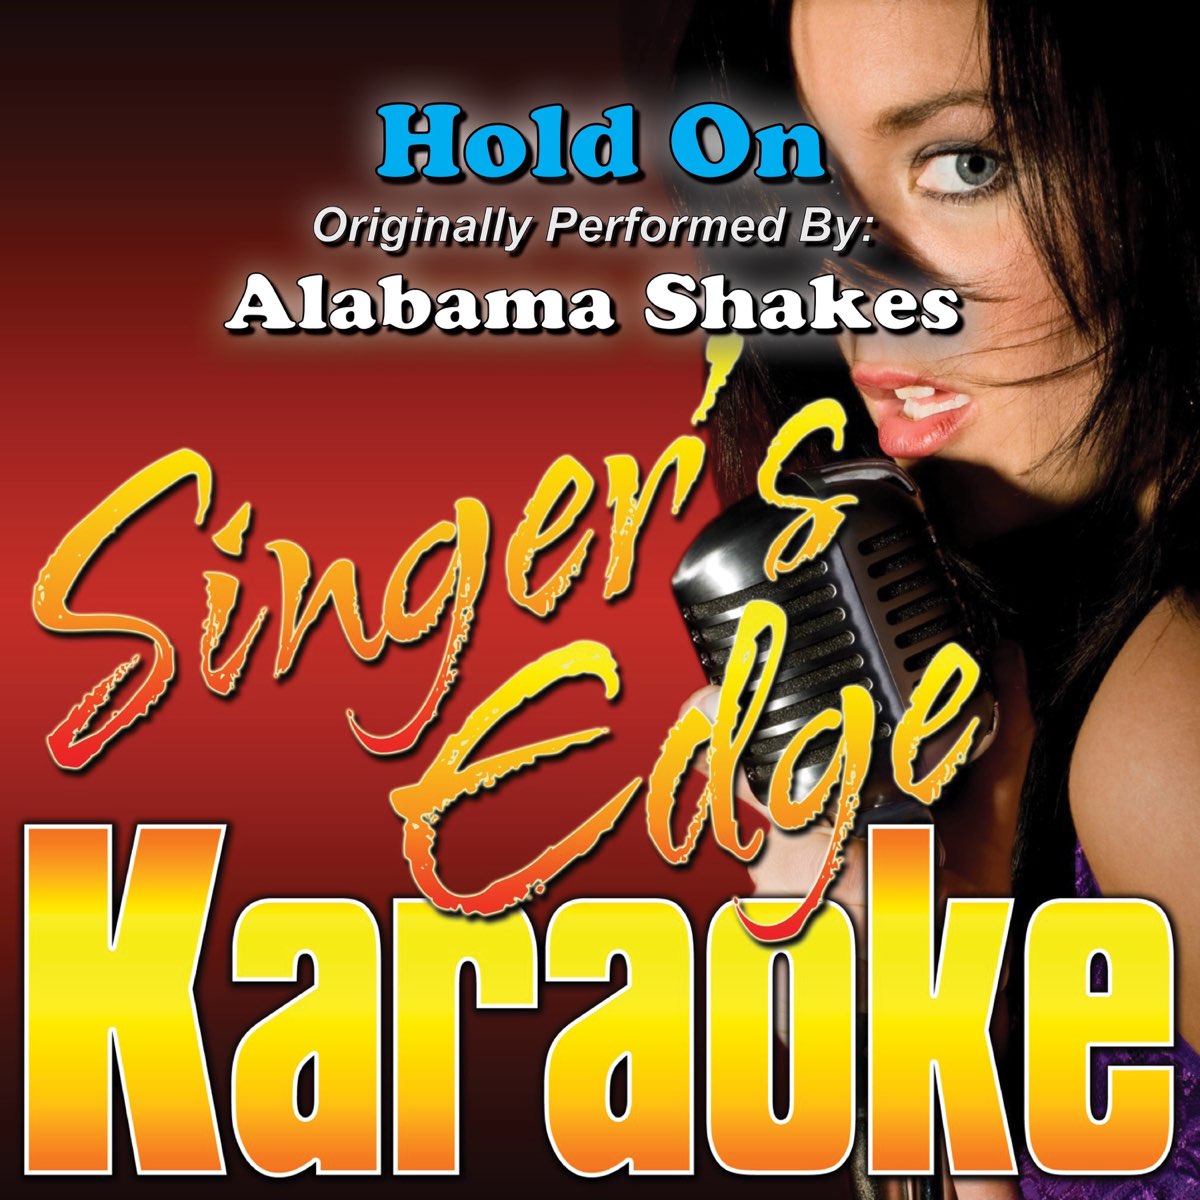 Hold On (Originally Performed By Alabama Shakes) [Instrumental] - Single by  Singer's Edge Karaoke on Apple Music